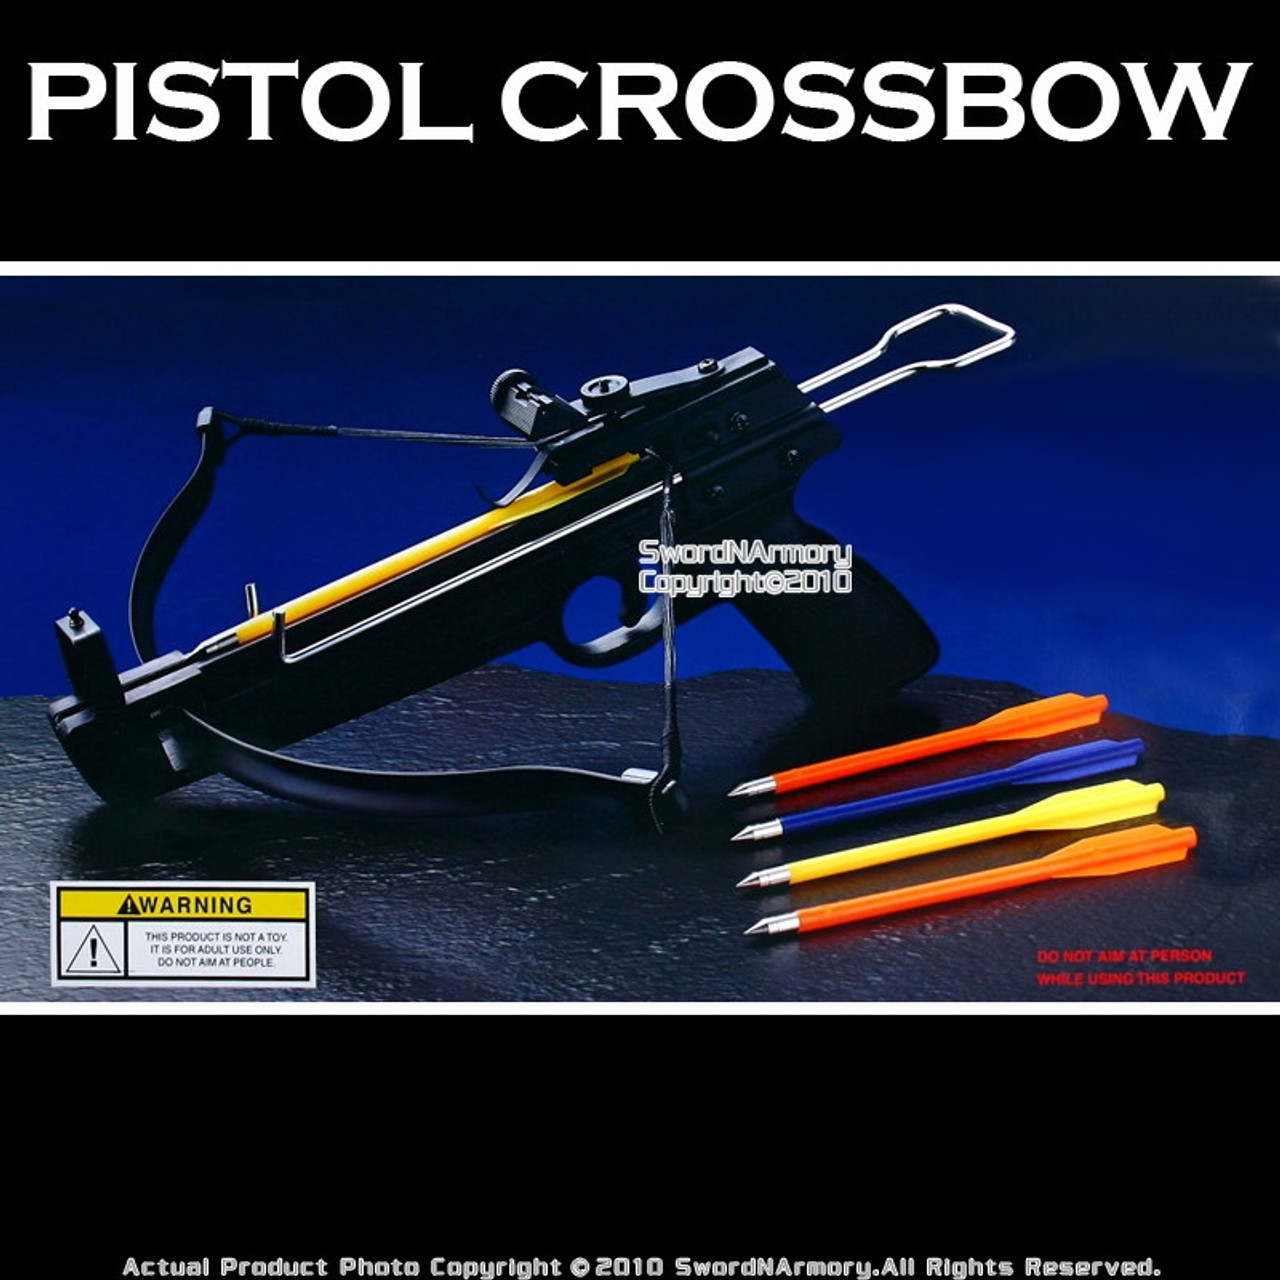 50 lbs Taiwan Made Pistol Crossbow w/ 5 Plastics Arrows and 36